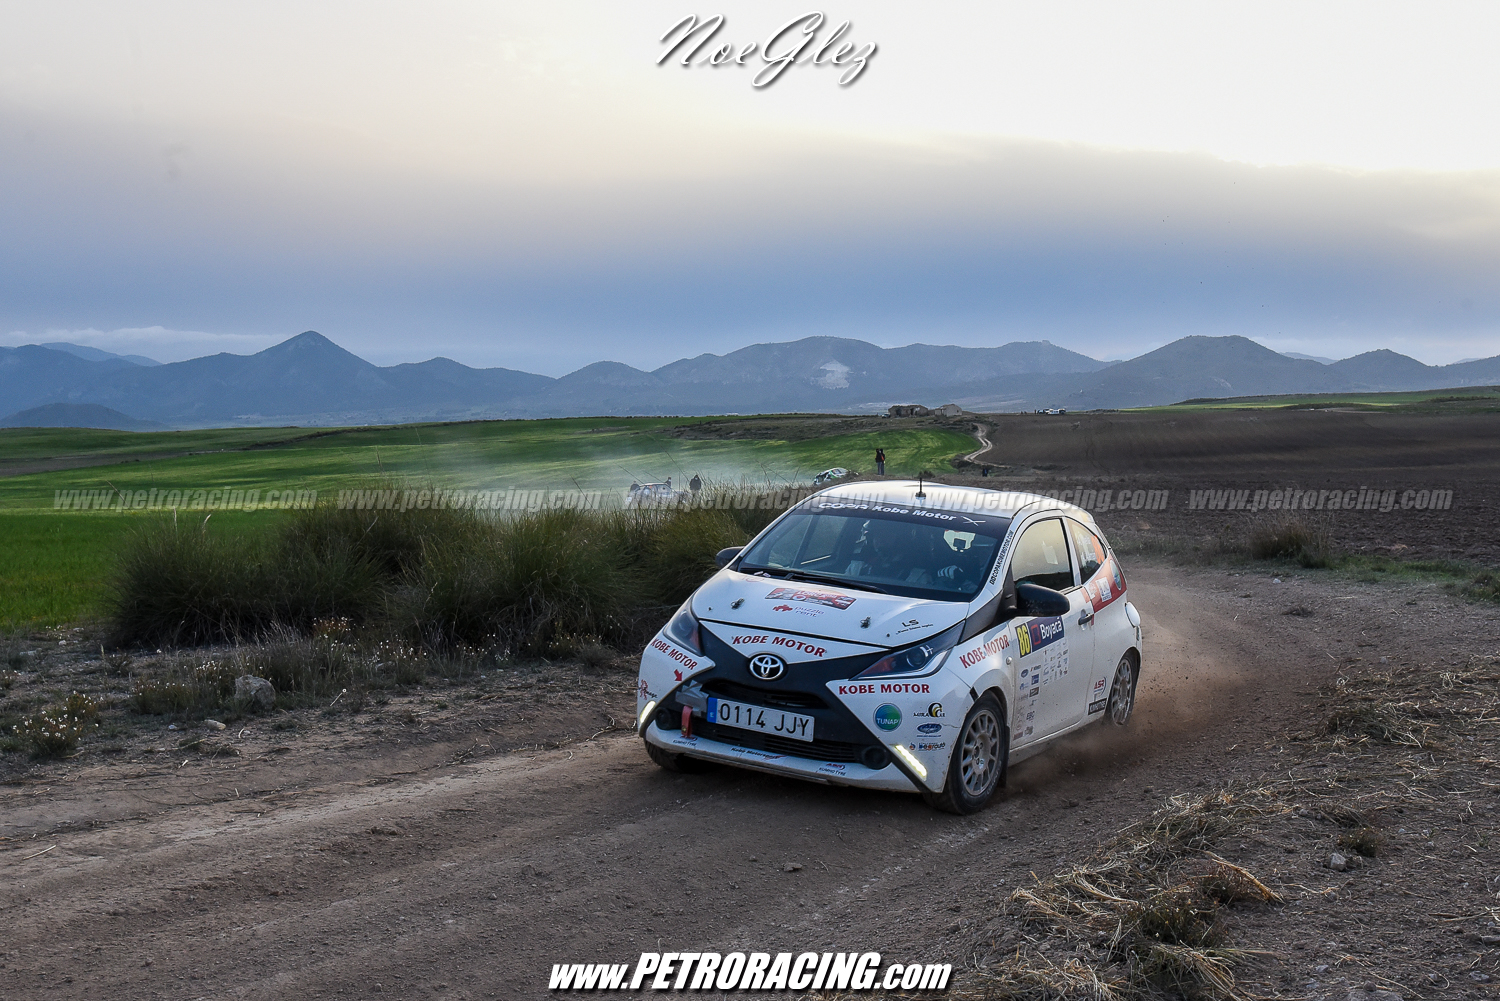 X Rallye Tierra Lorca - NoeGlez